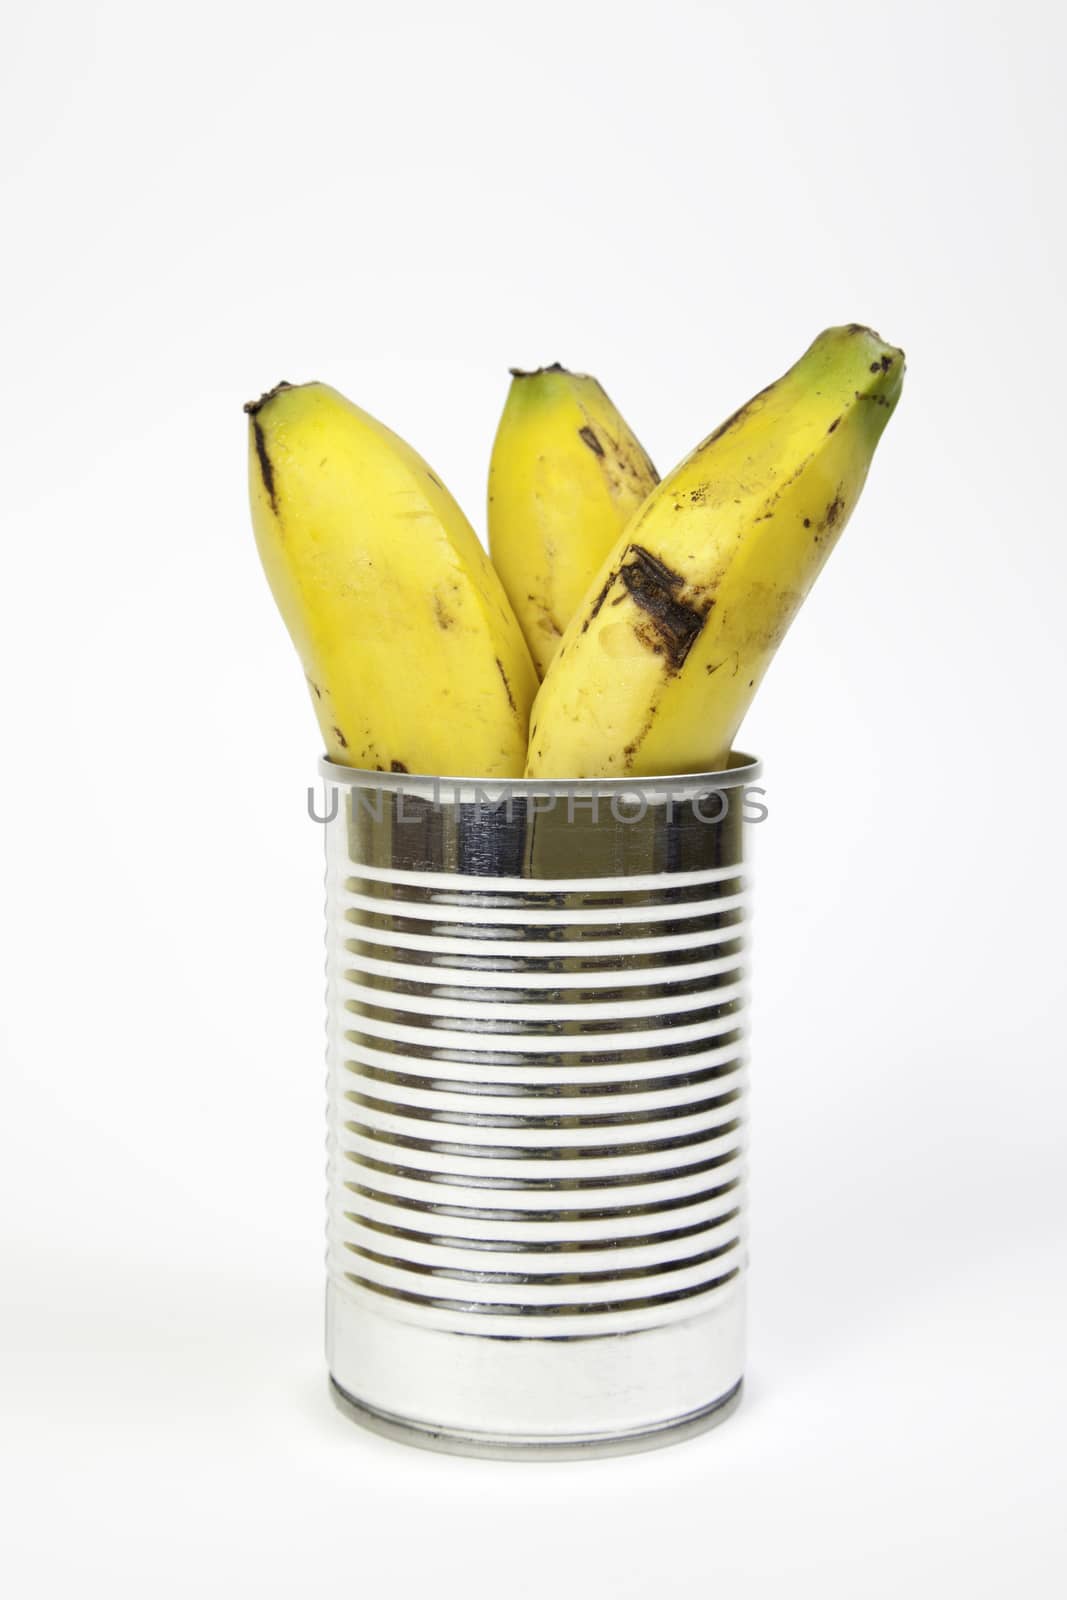 Bananas canned by esebene